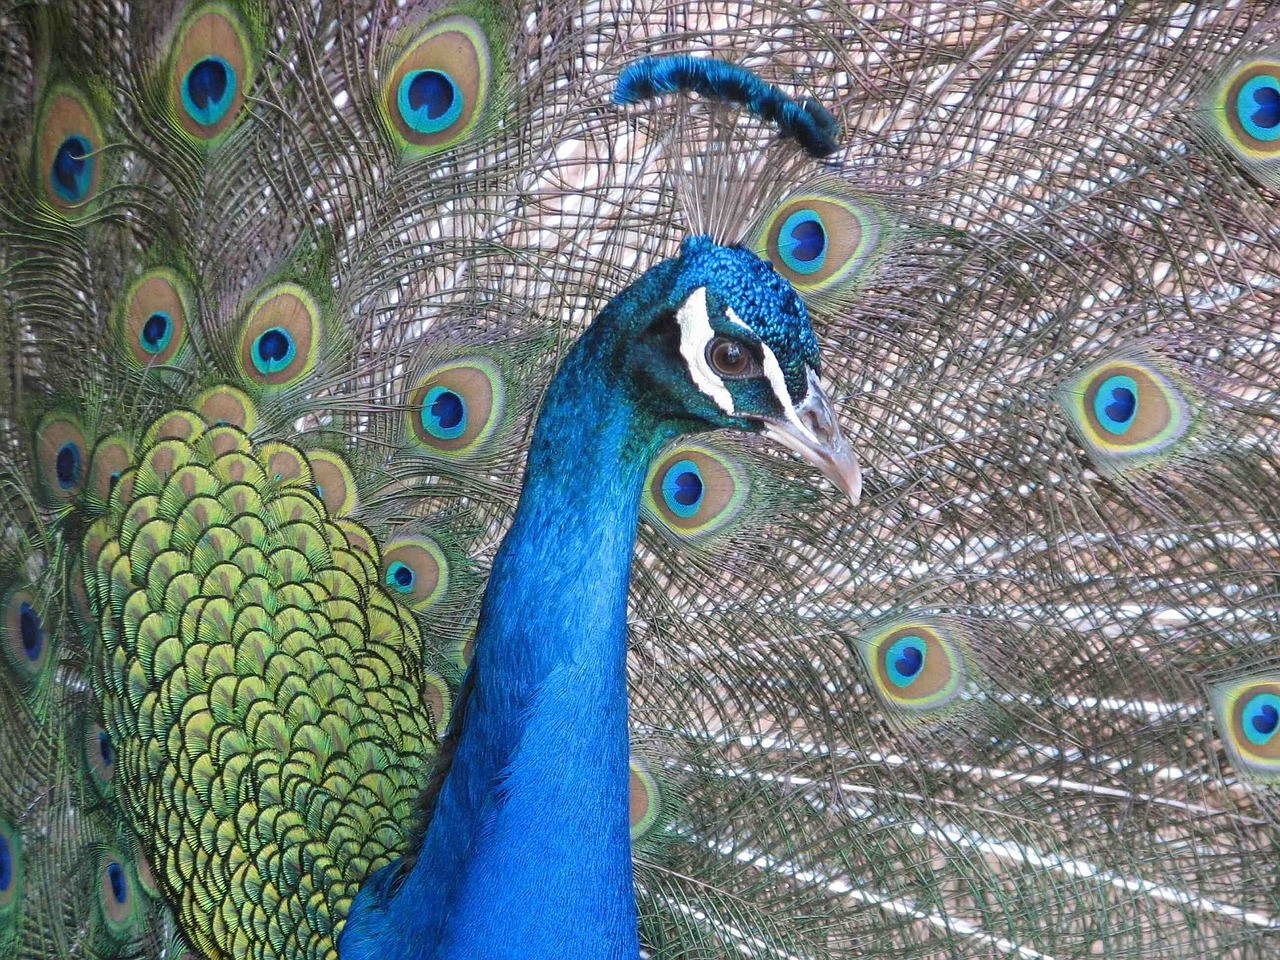 peacock close up plumage free photo